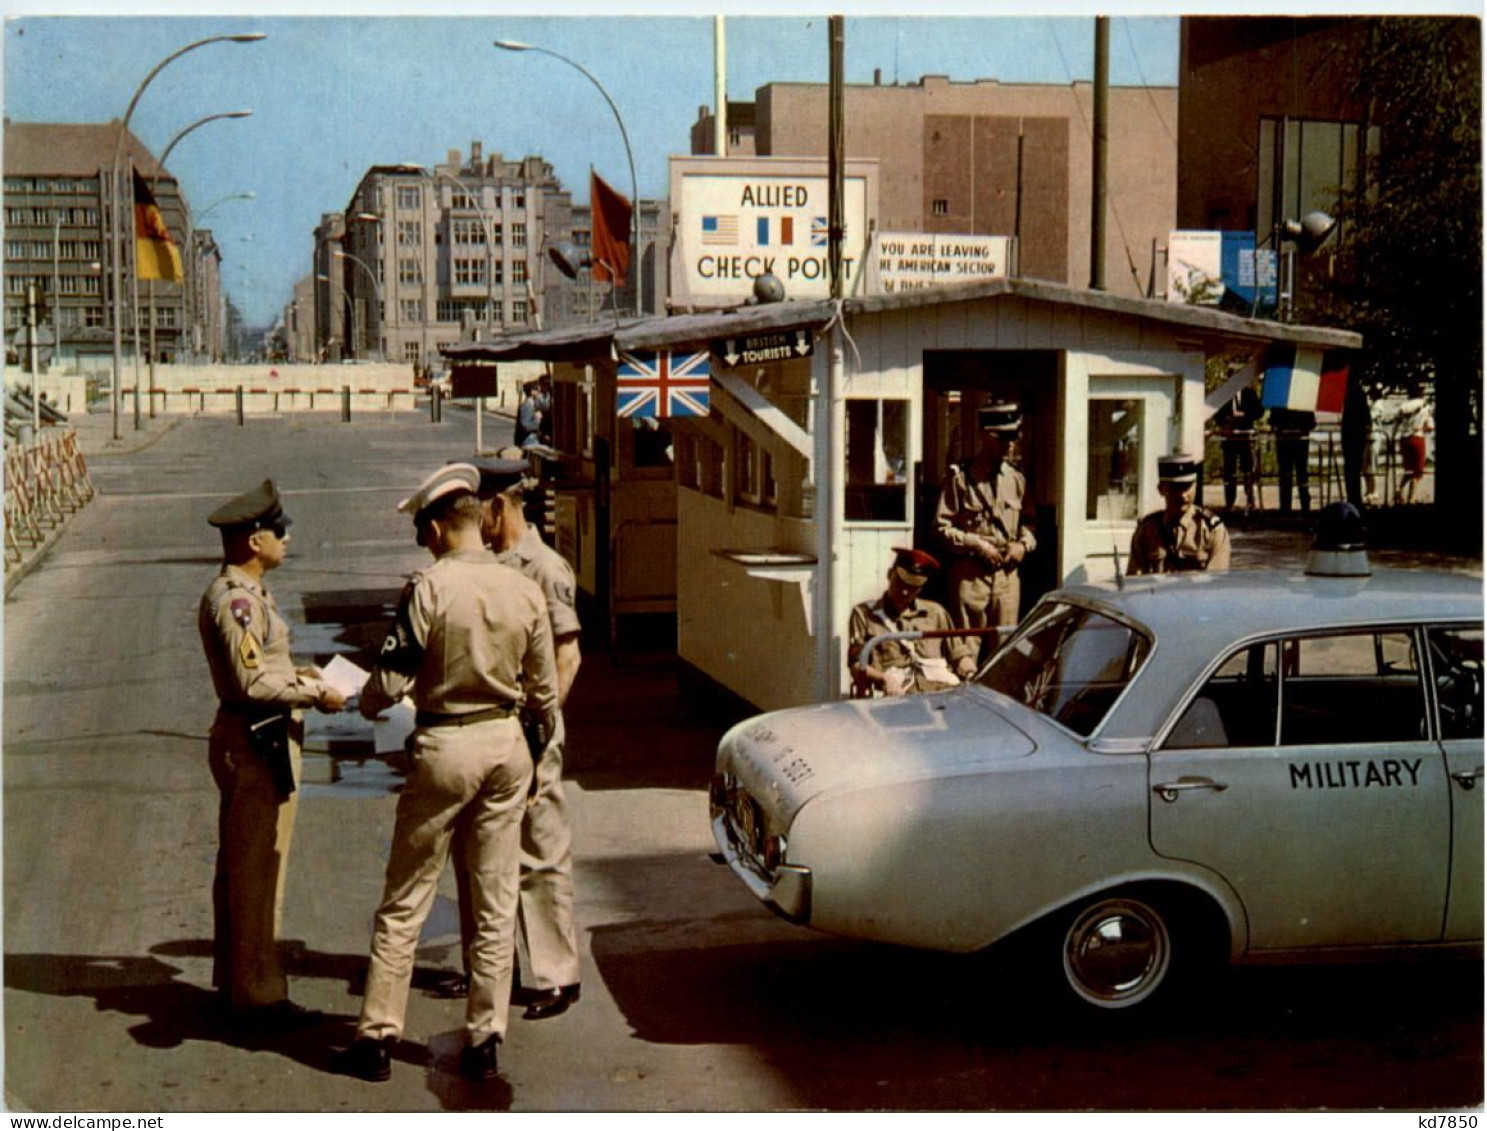 Berlin - Checkpoint Charlie - Berlin Wall